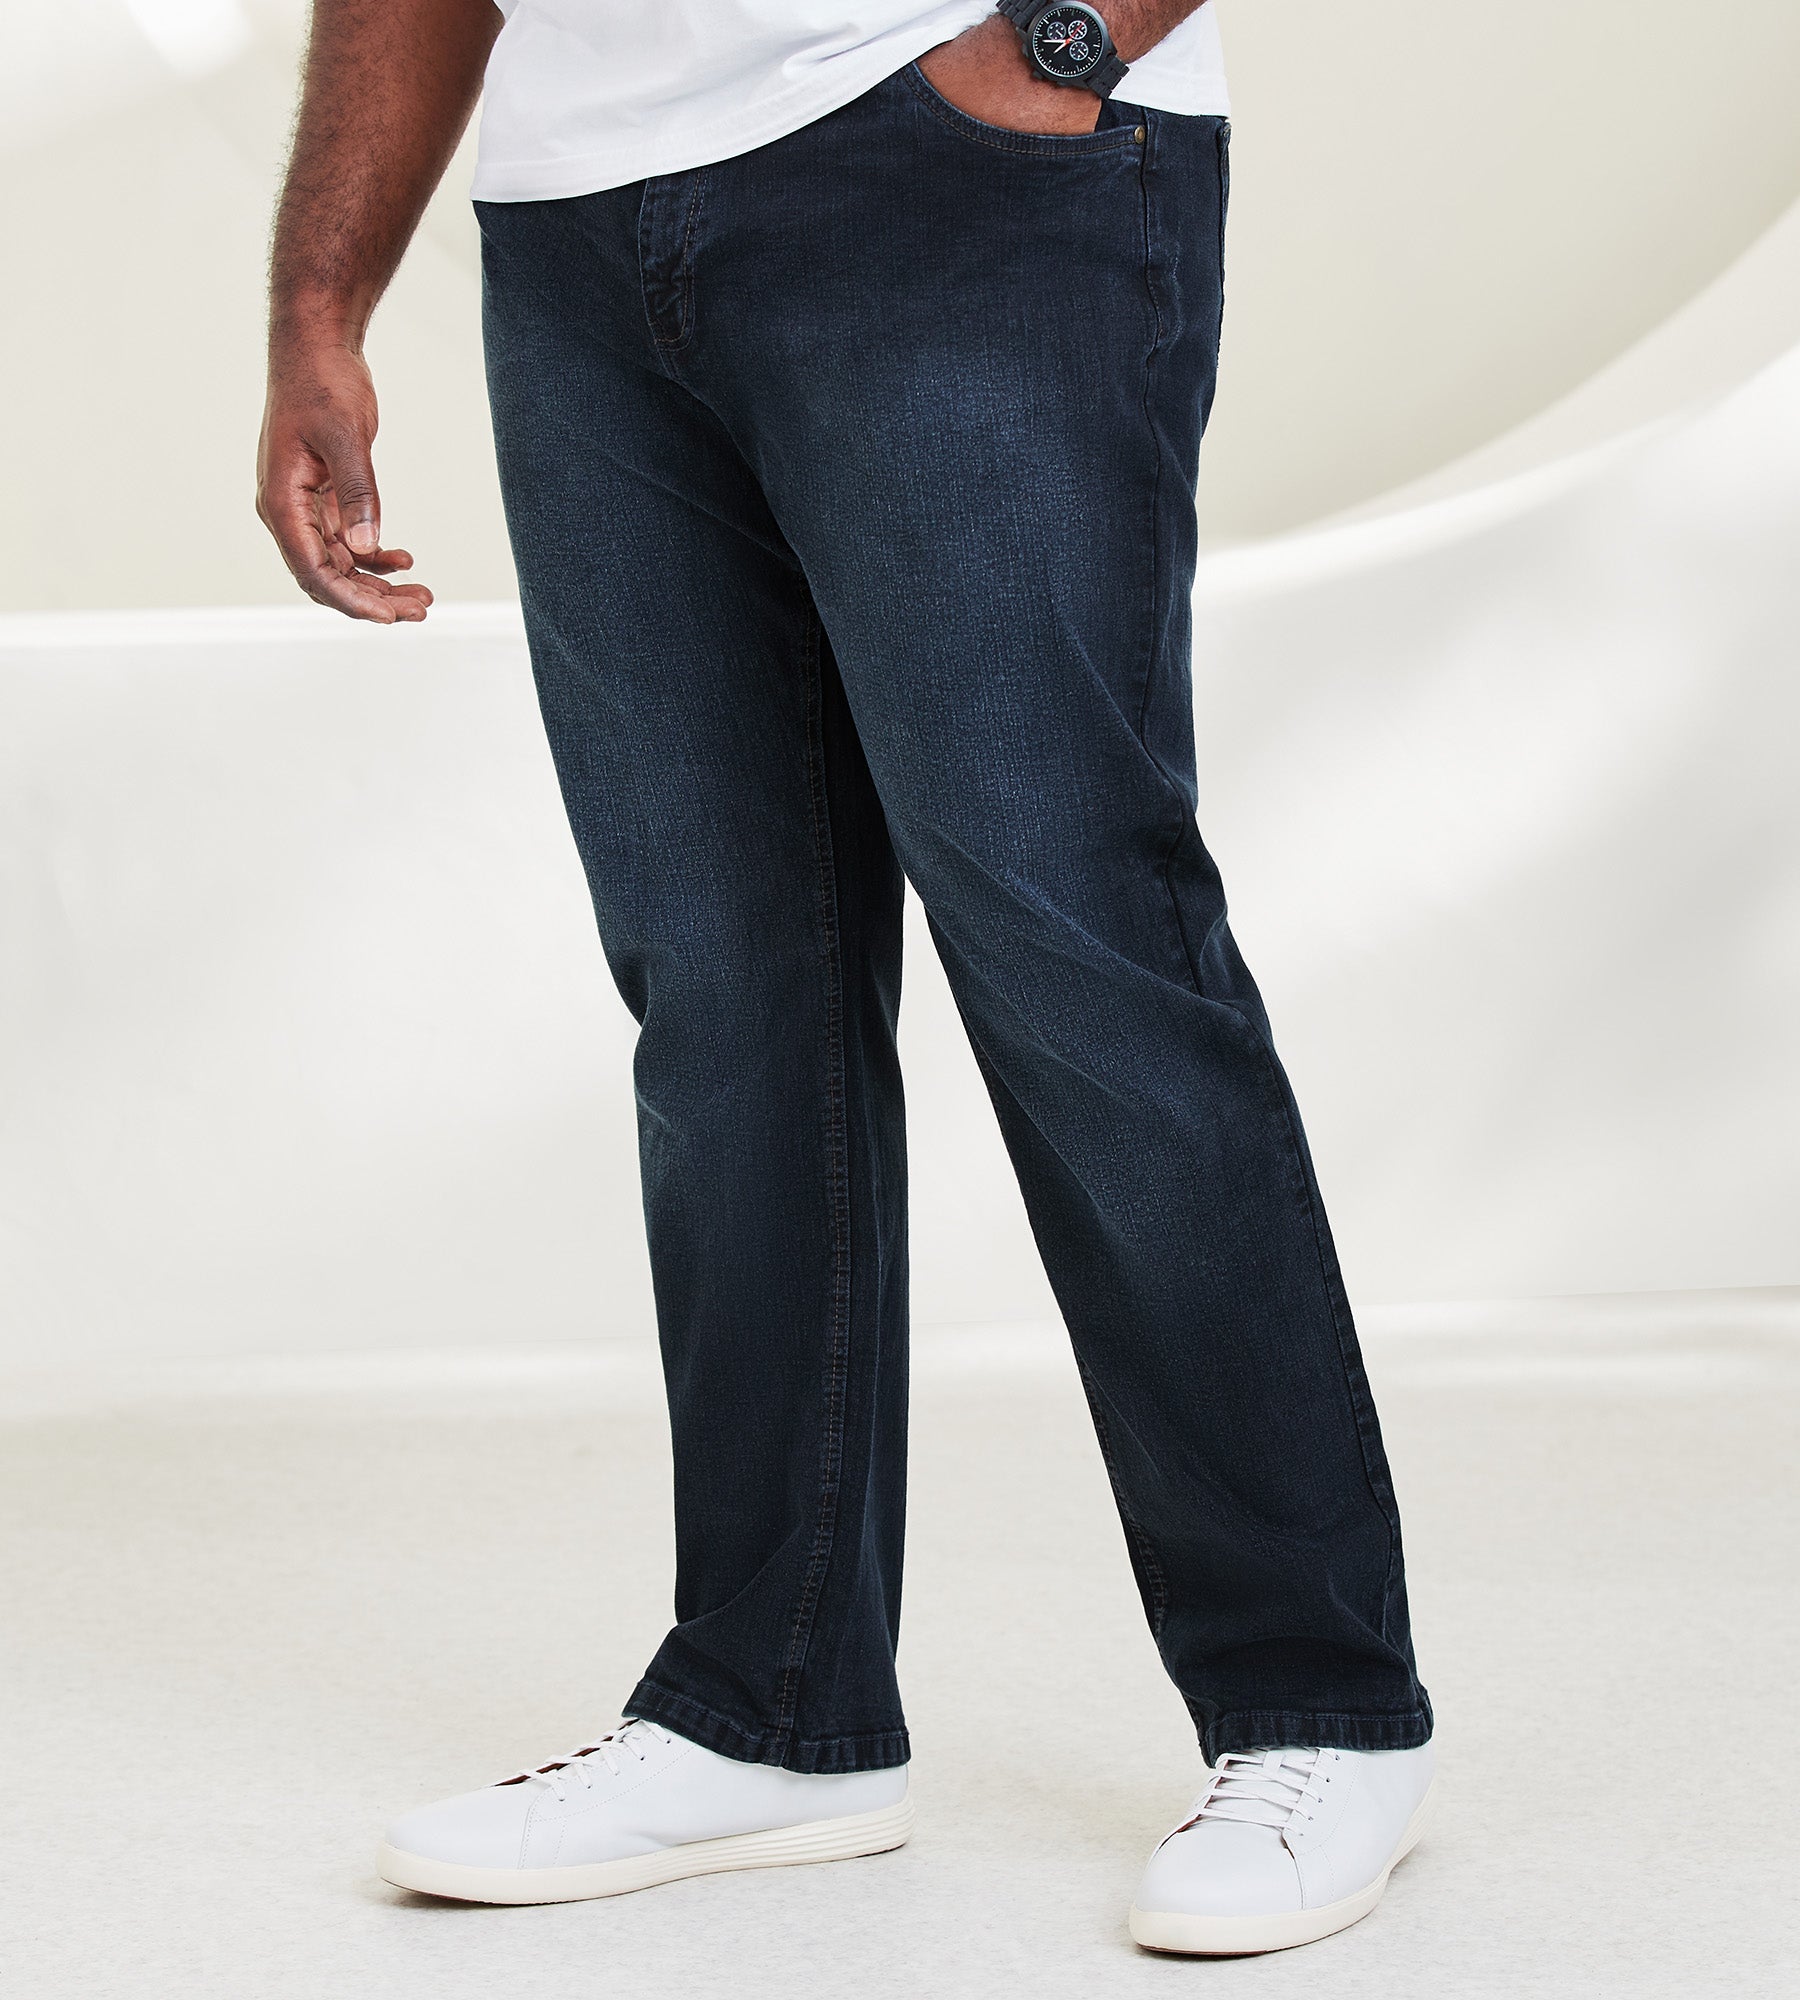 Stanfield's Men's Big n Tall Thermal Premium Cotton Rib Long Johns  Underwear Baselayer